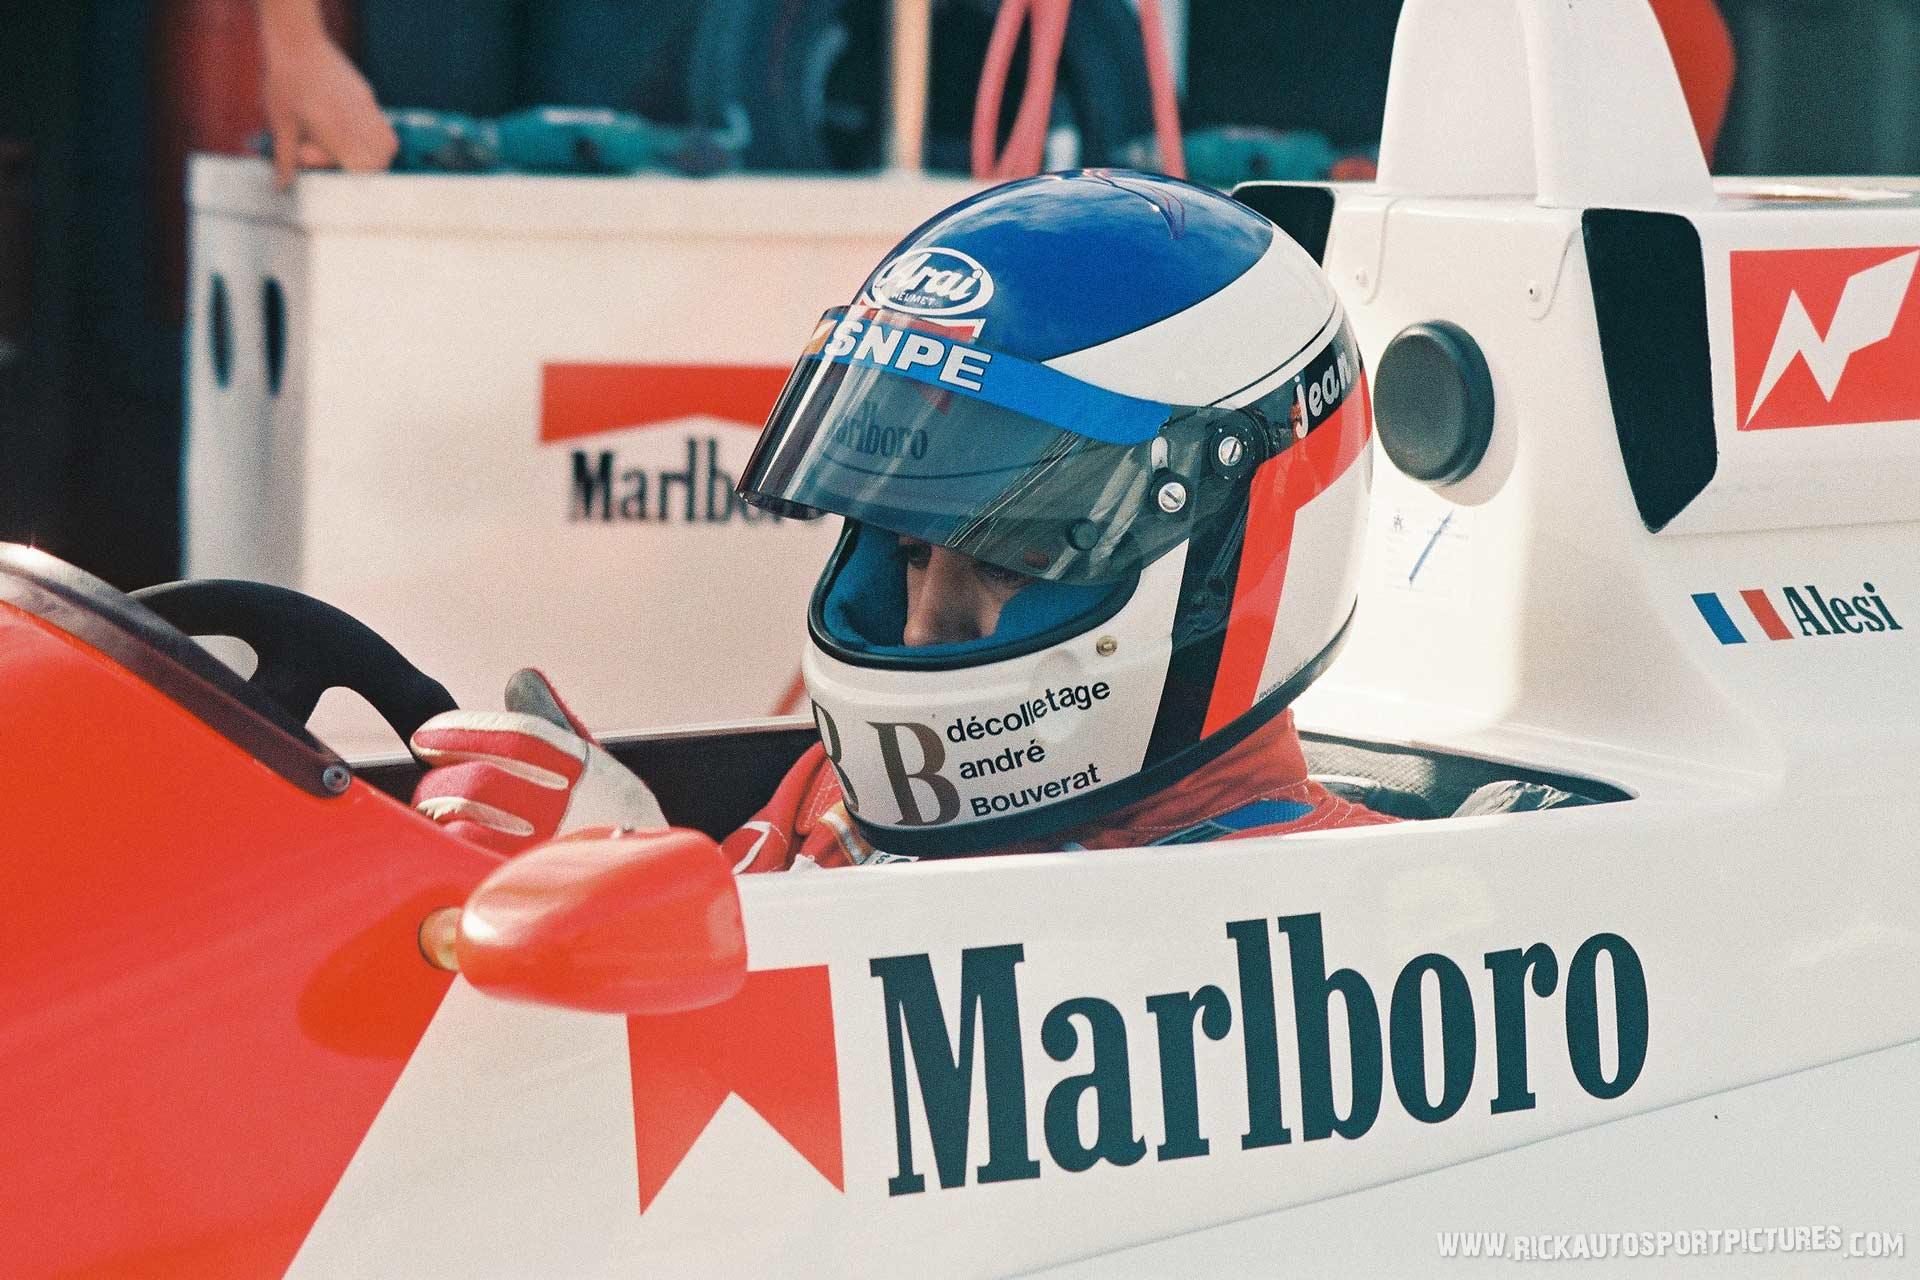 Jean Alesi, casque helmet f3000